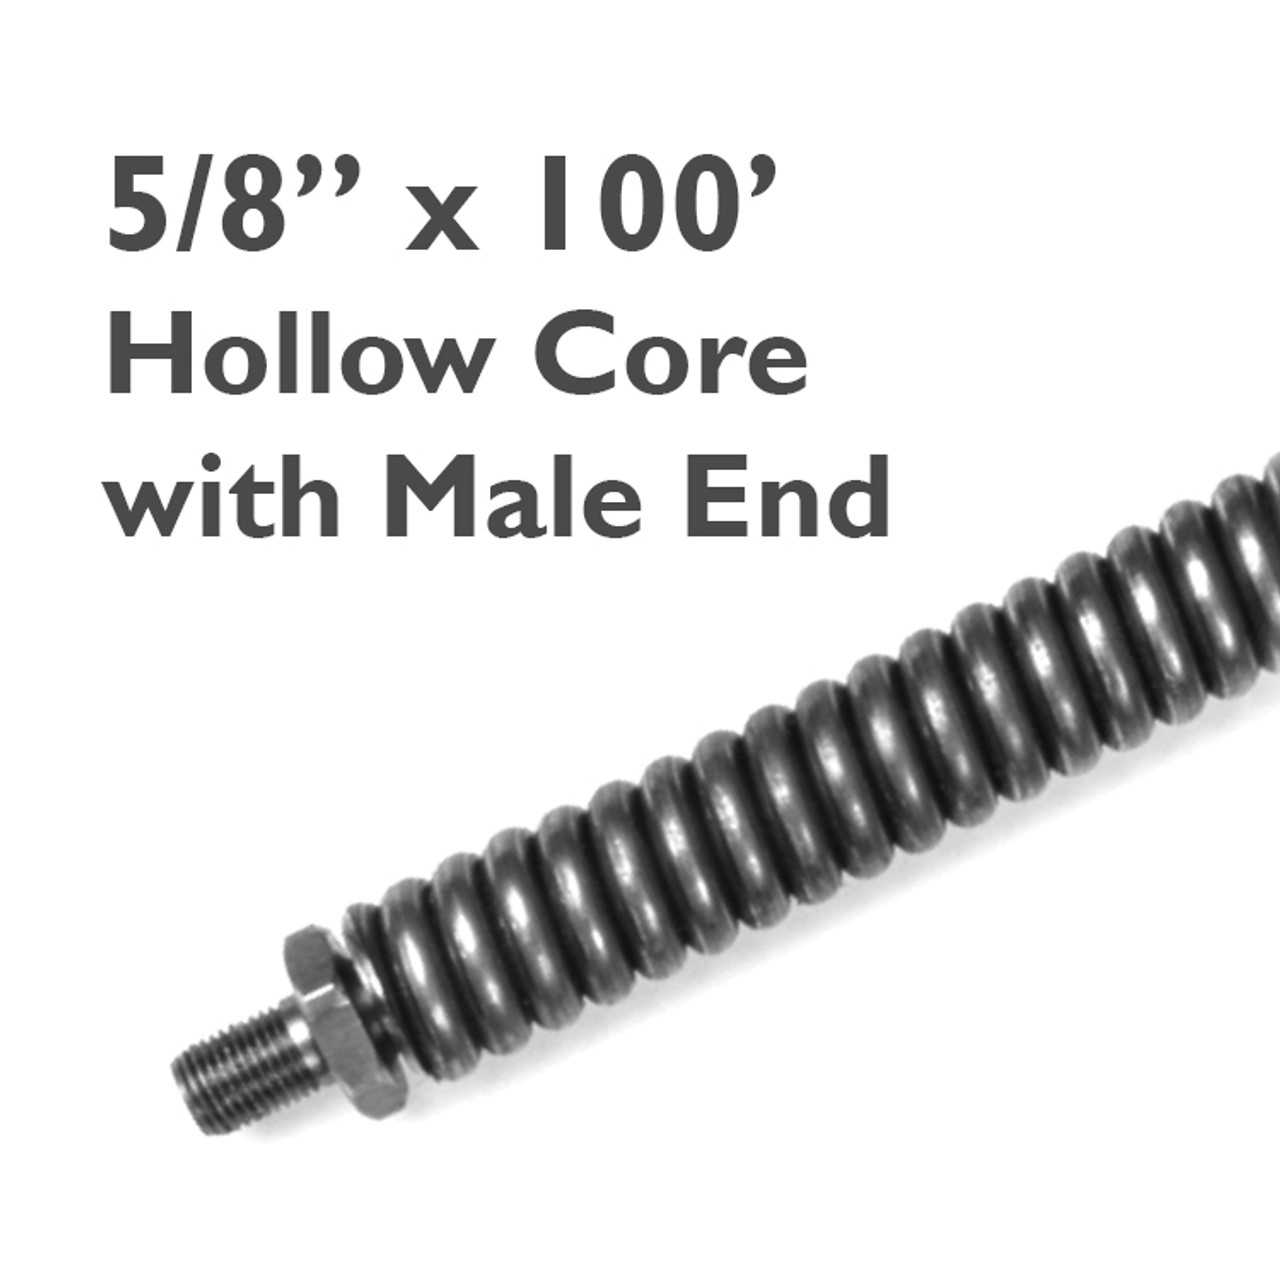 5/8 x 100' Hollow Core Drain Snake